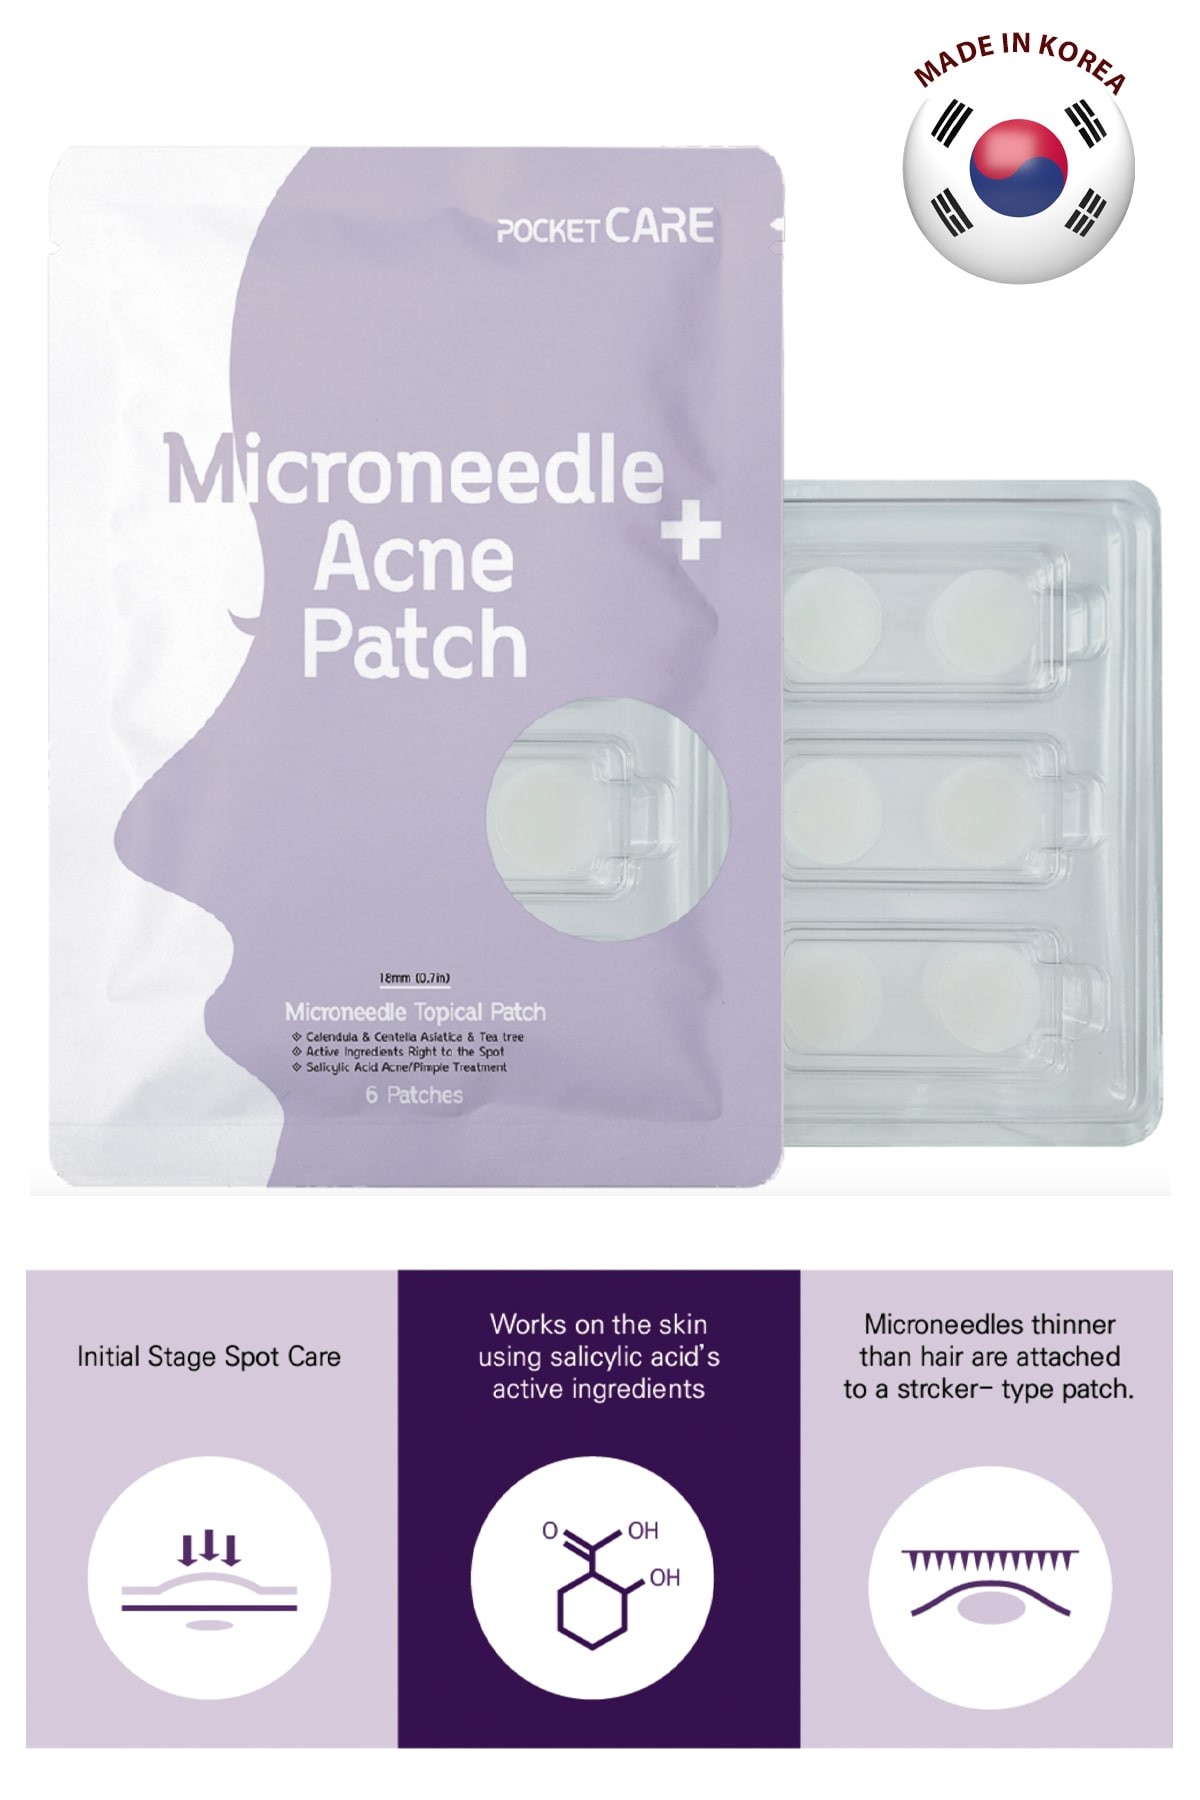 Pocketcare Micro Needle Acne Patch